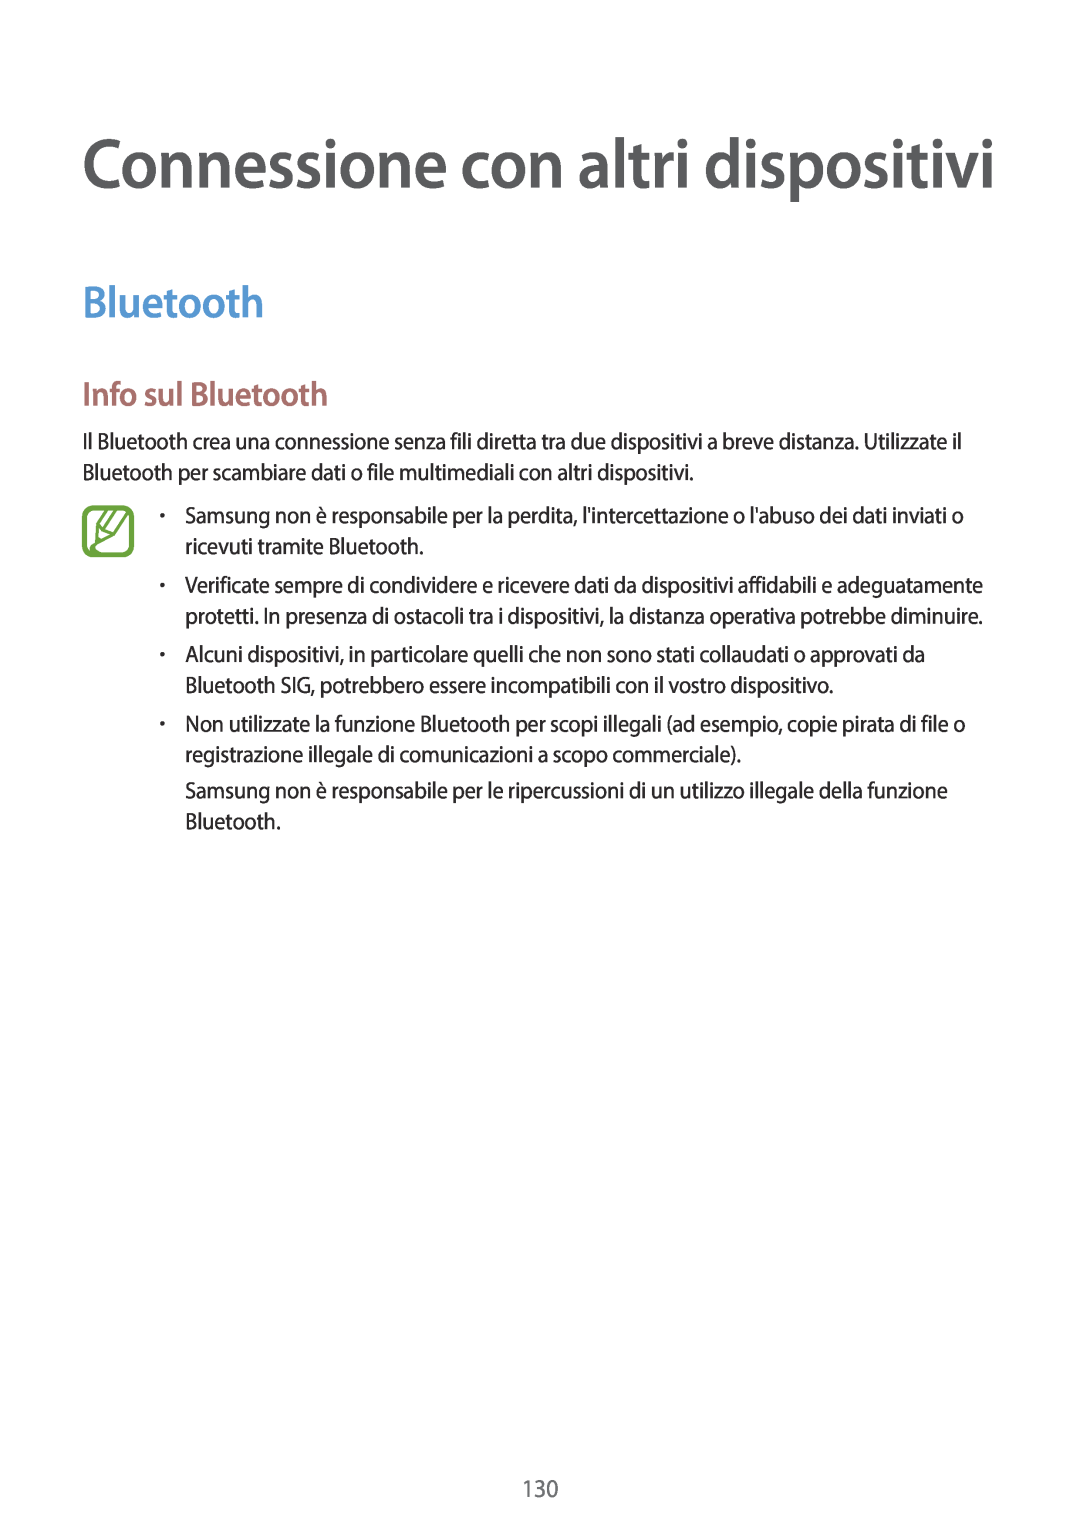 Samsung SM-G800FZKAXEF, SM-G800FZWADBT, SM-G800FZDADBT manual Info sul Bluetooth, Connessione con altri dispositivi 